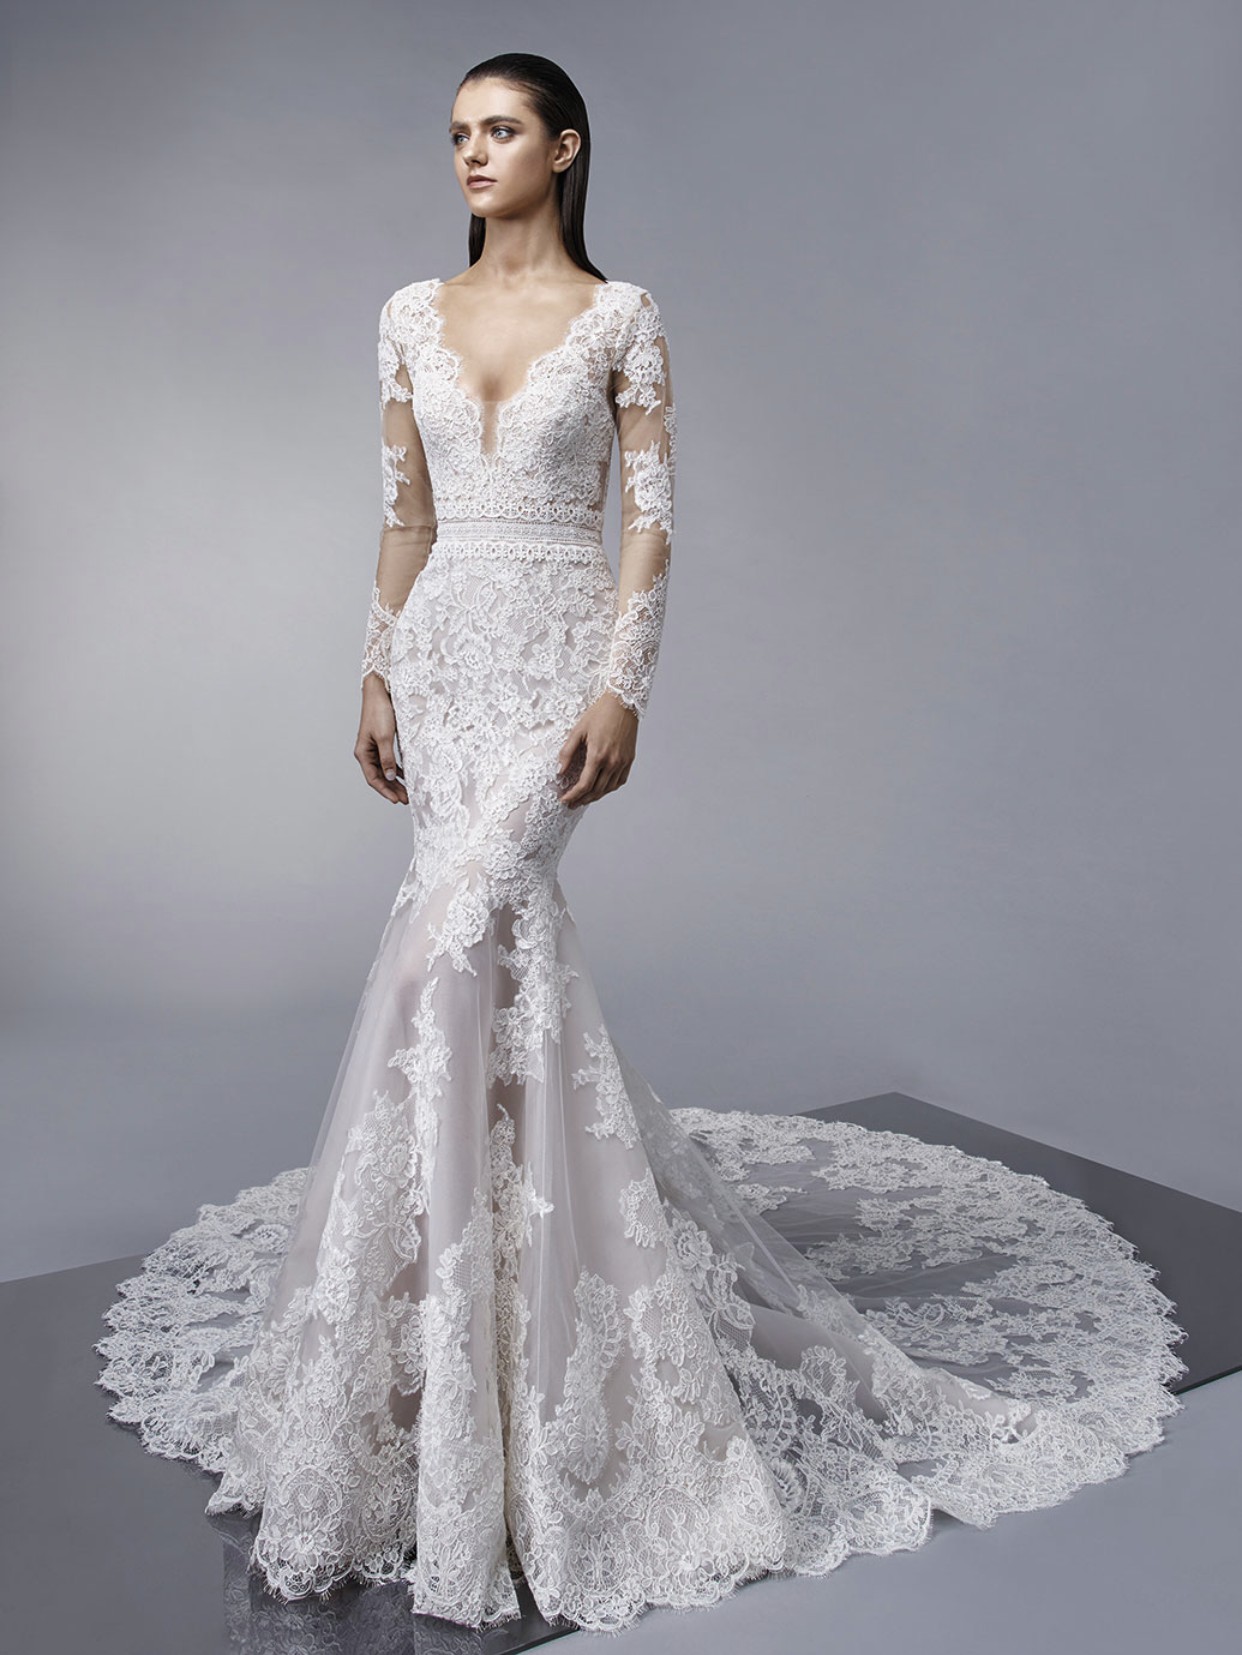 ankara white lace dresses